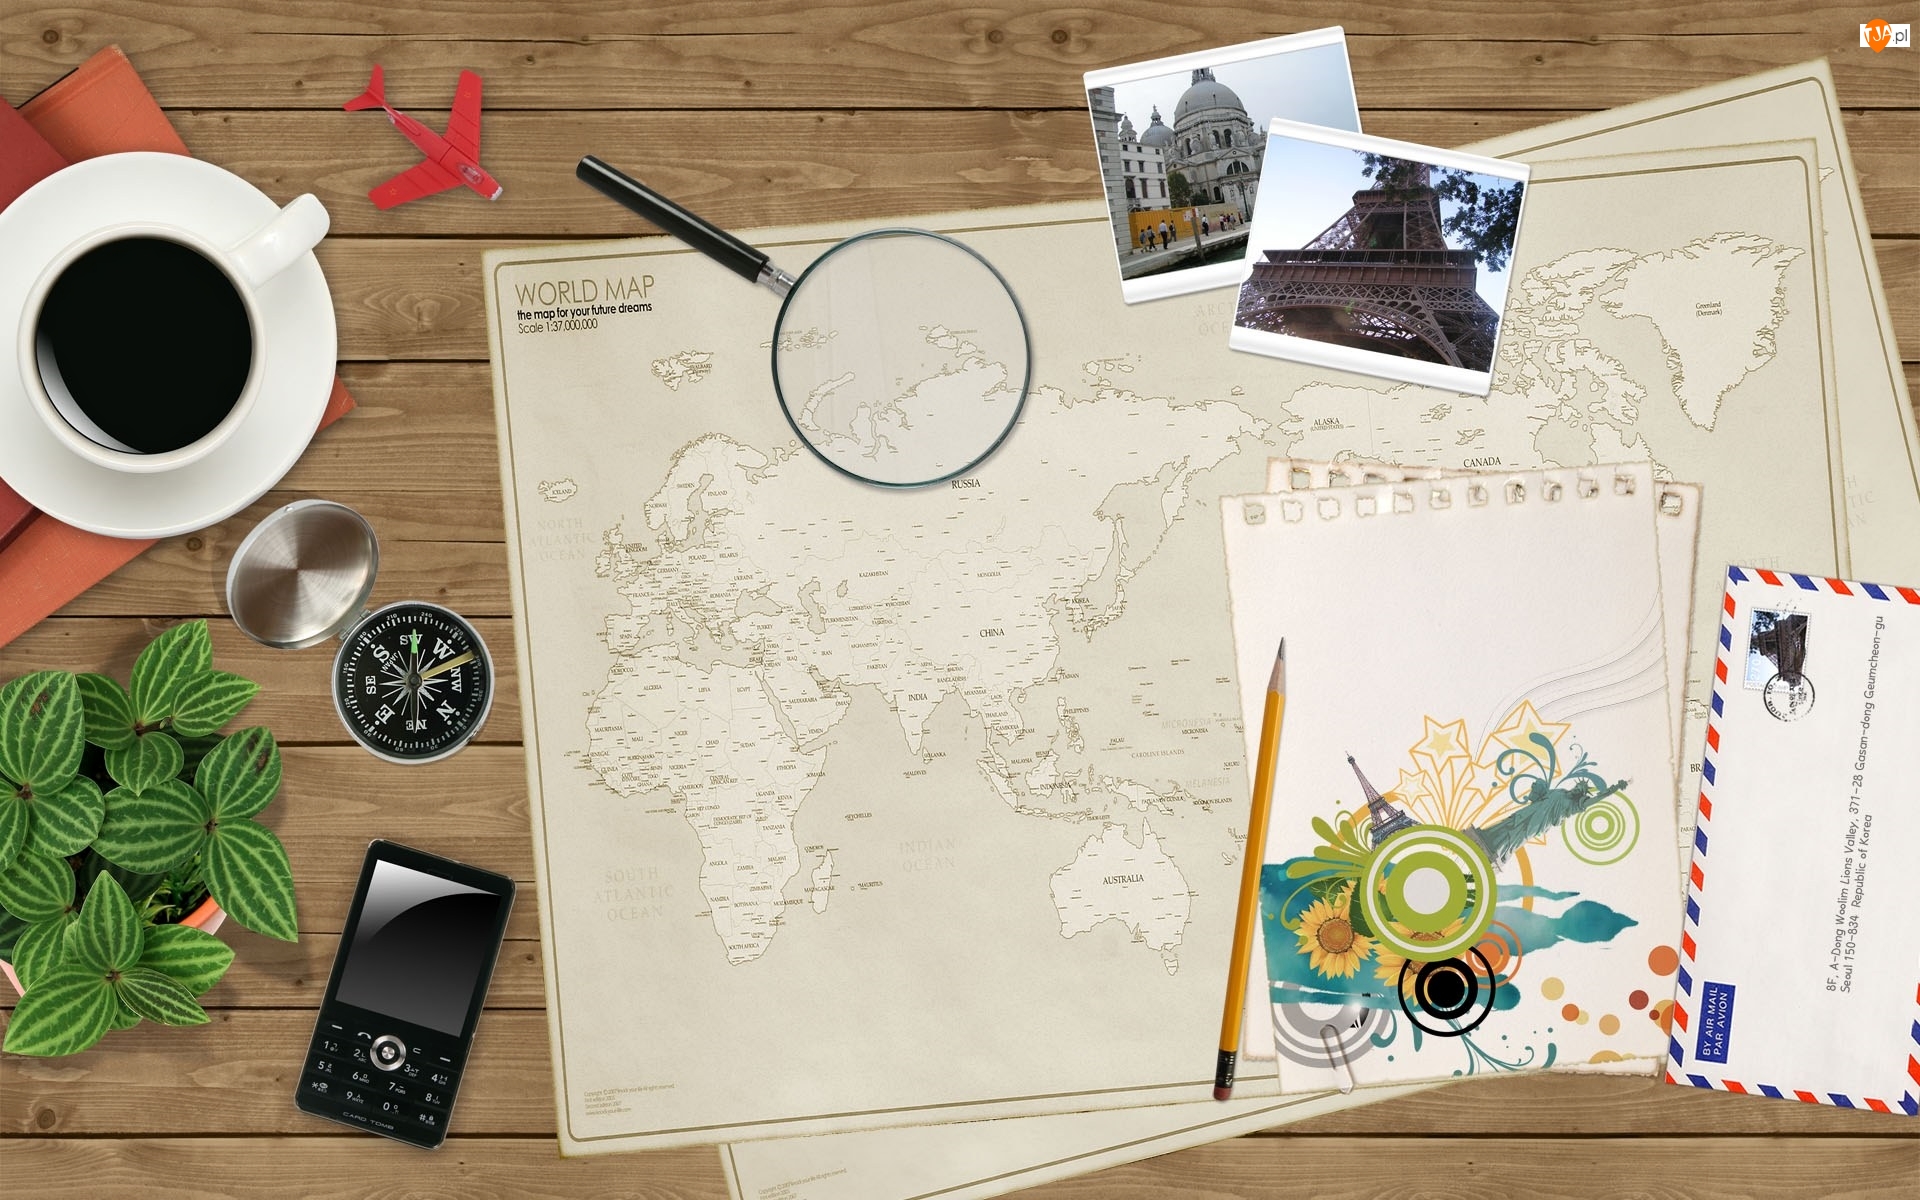 Podróż, Kompas, Deski, Zdjęcia, Telefon, Mapa, Lupa, Kawa, Koperty